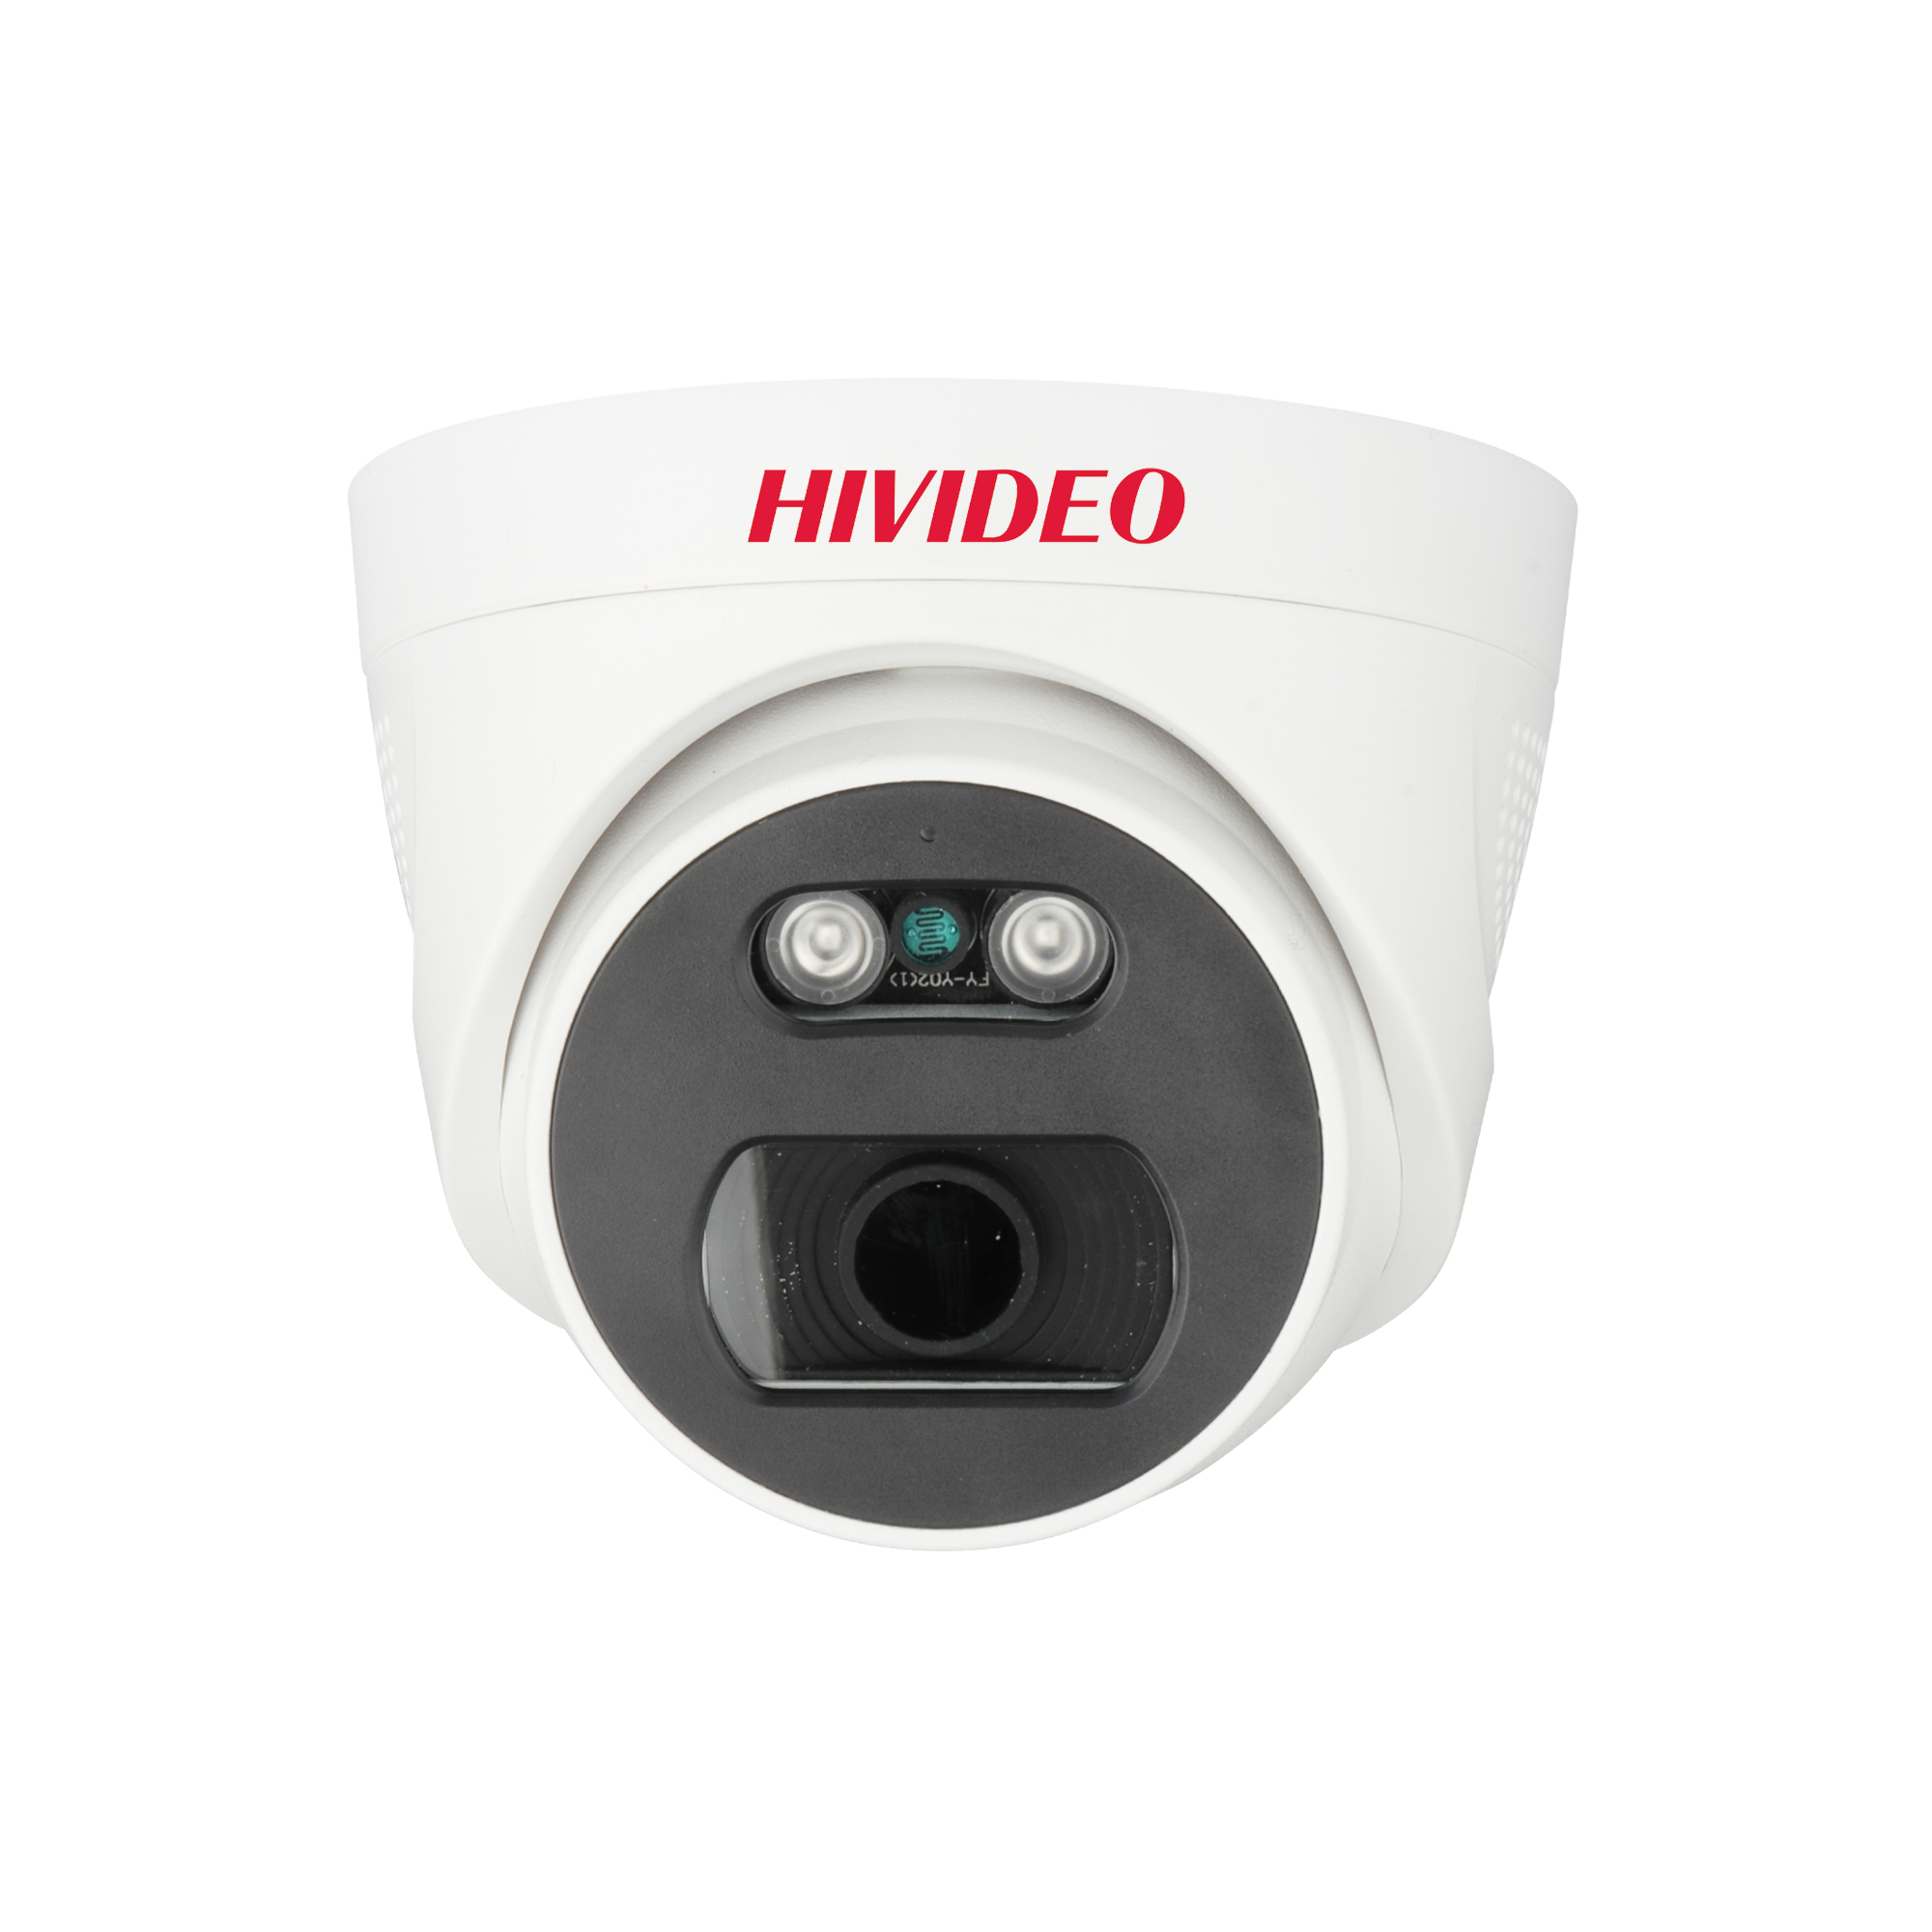 دوربین مداربسته دام HIVIDEO مدل HI-D73615